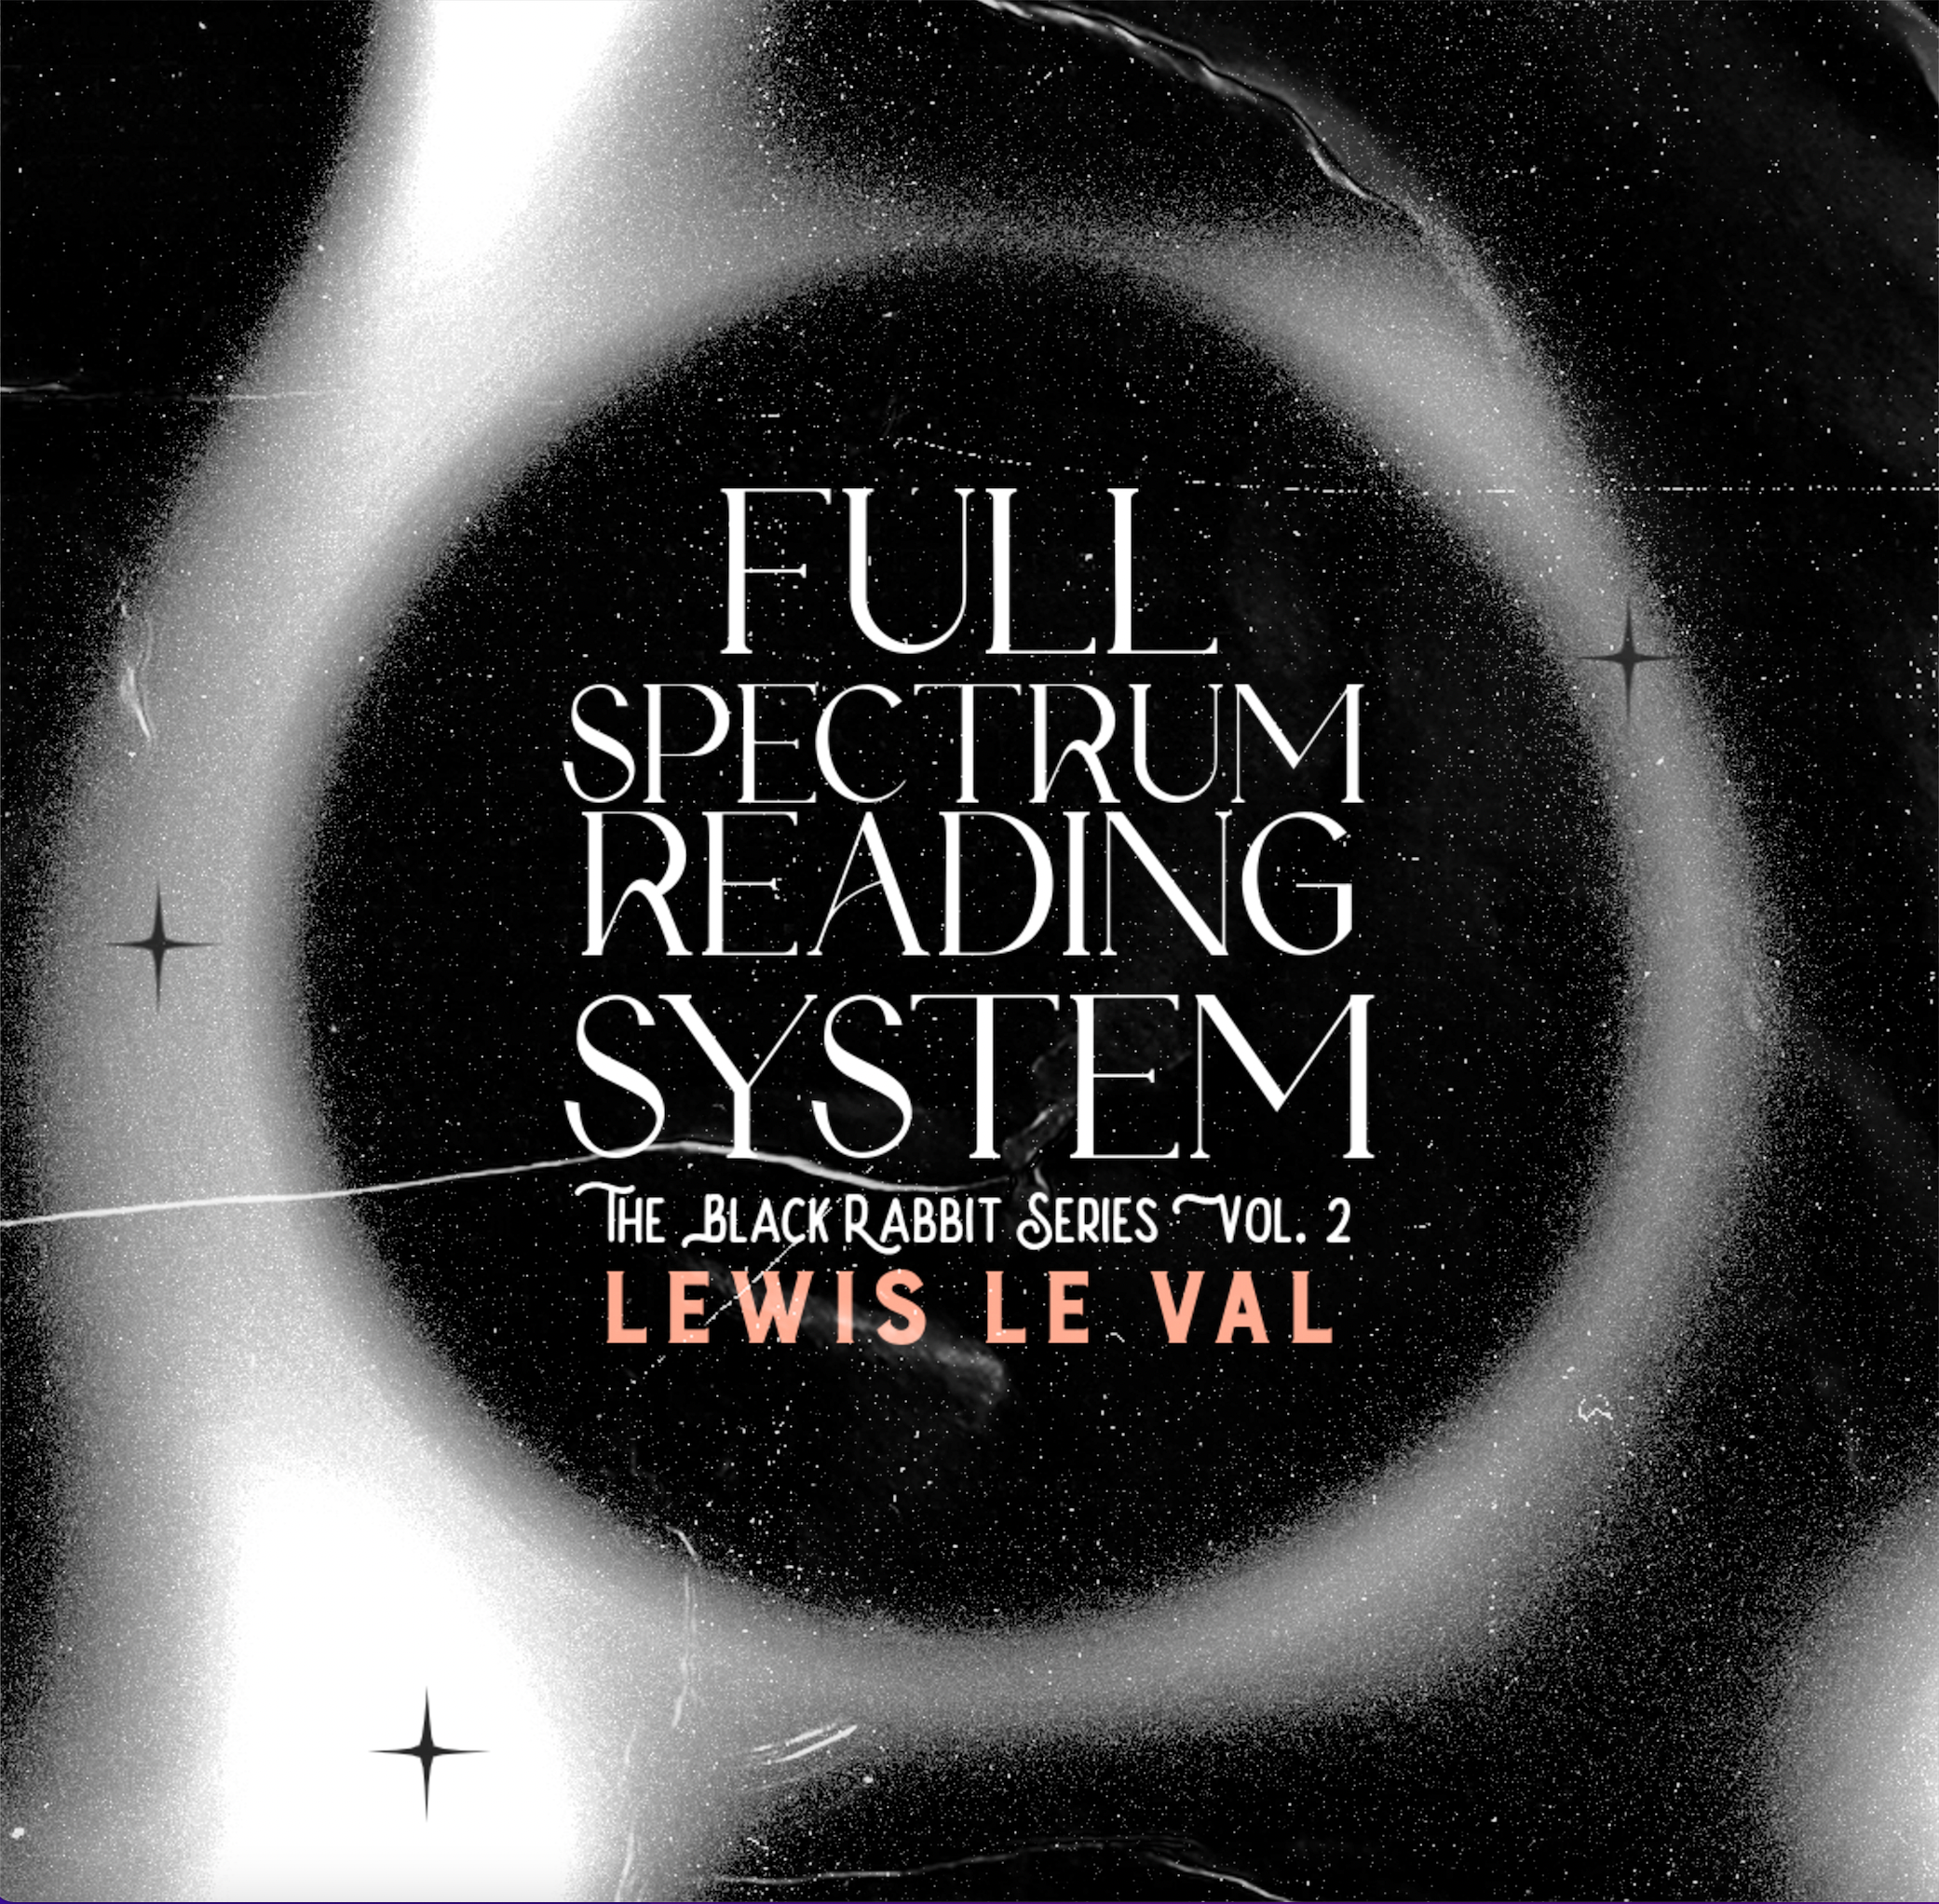 Lewis Le Val - Black Rabbit Vol. 2 - Full Spectrum Reading System (Video+PDF)